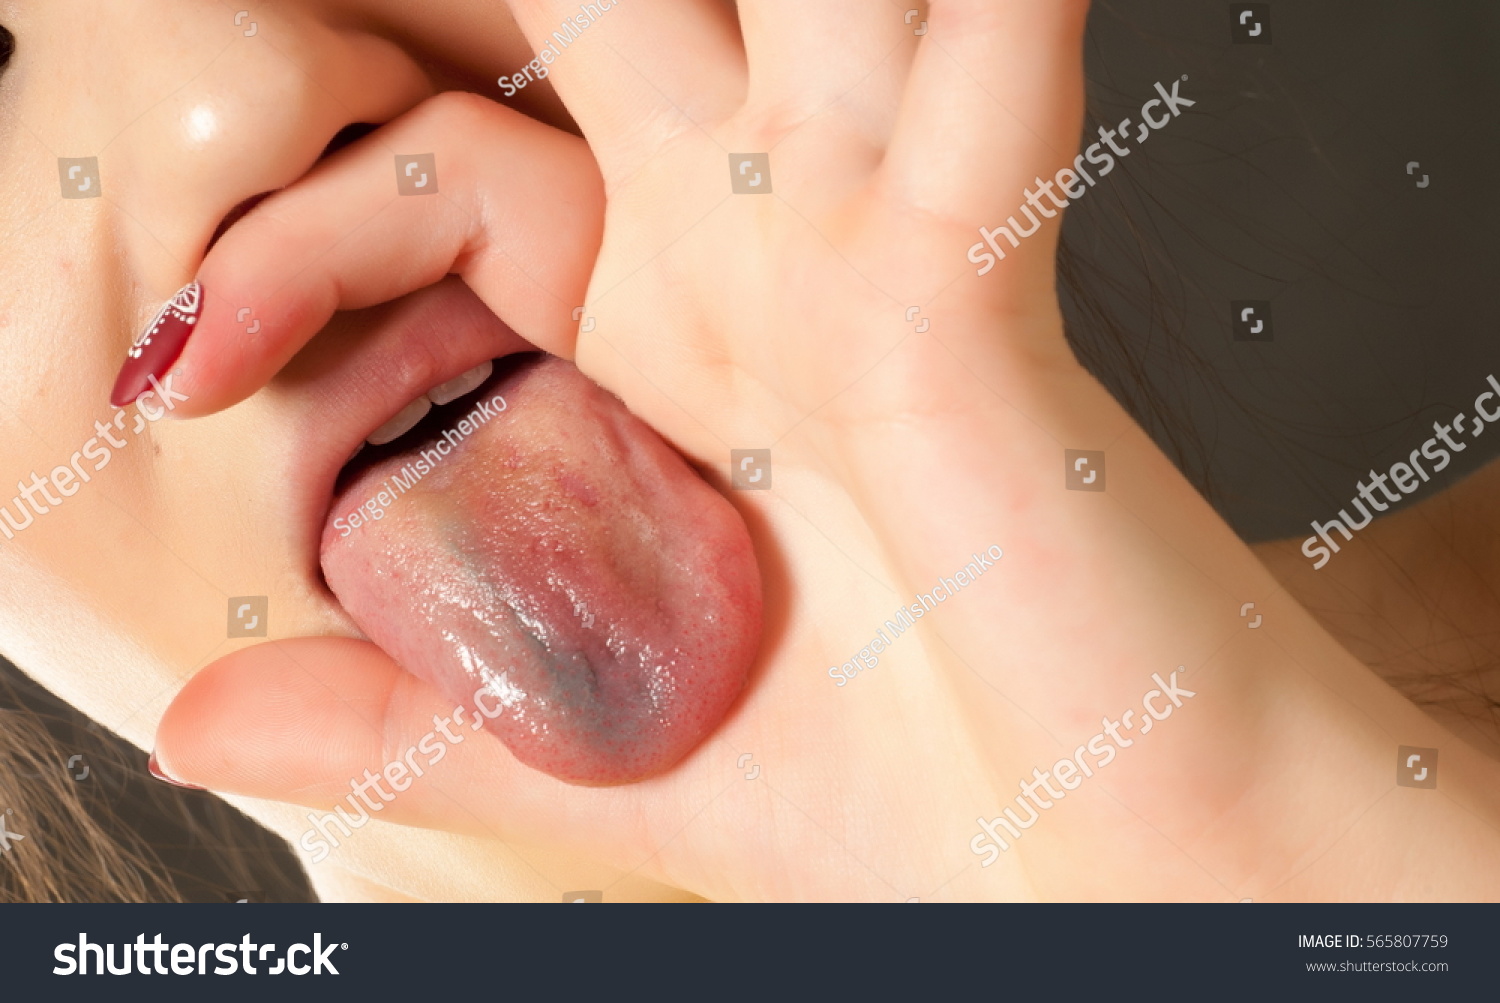 Girls blowjob tongue out